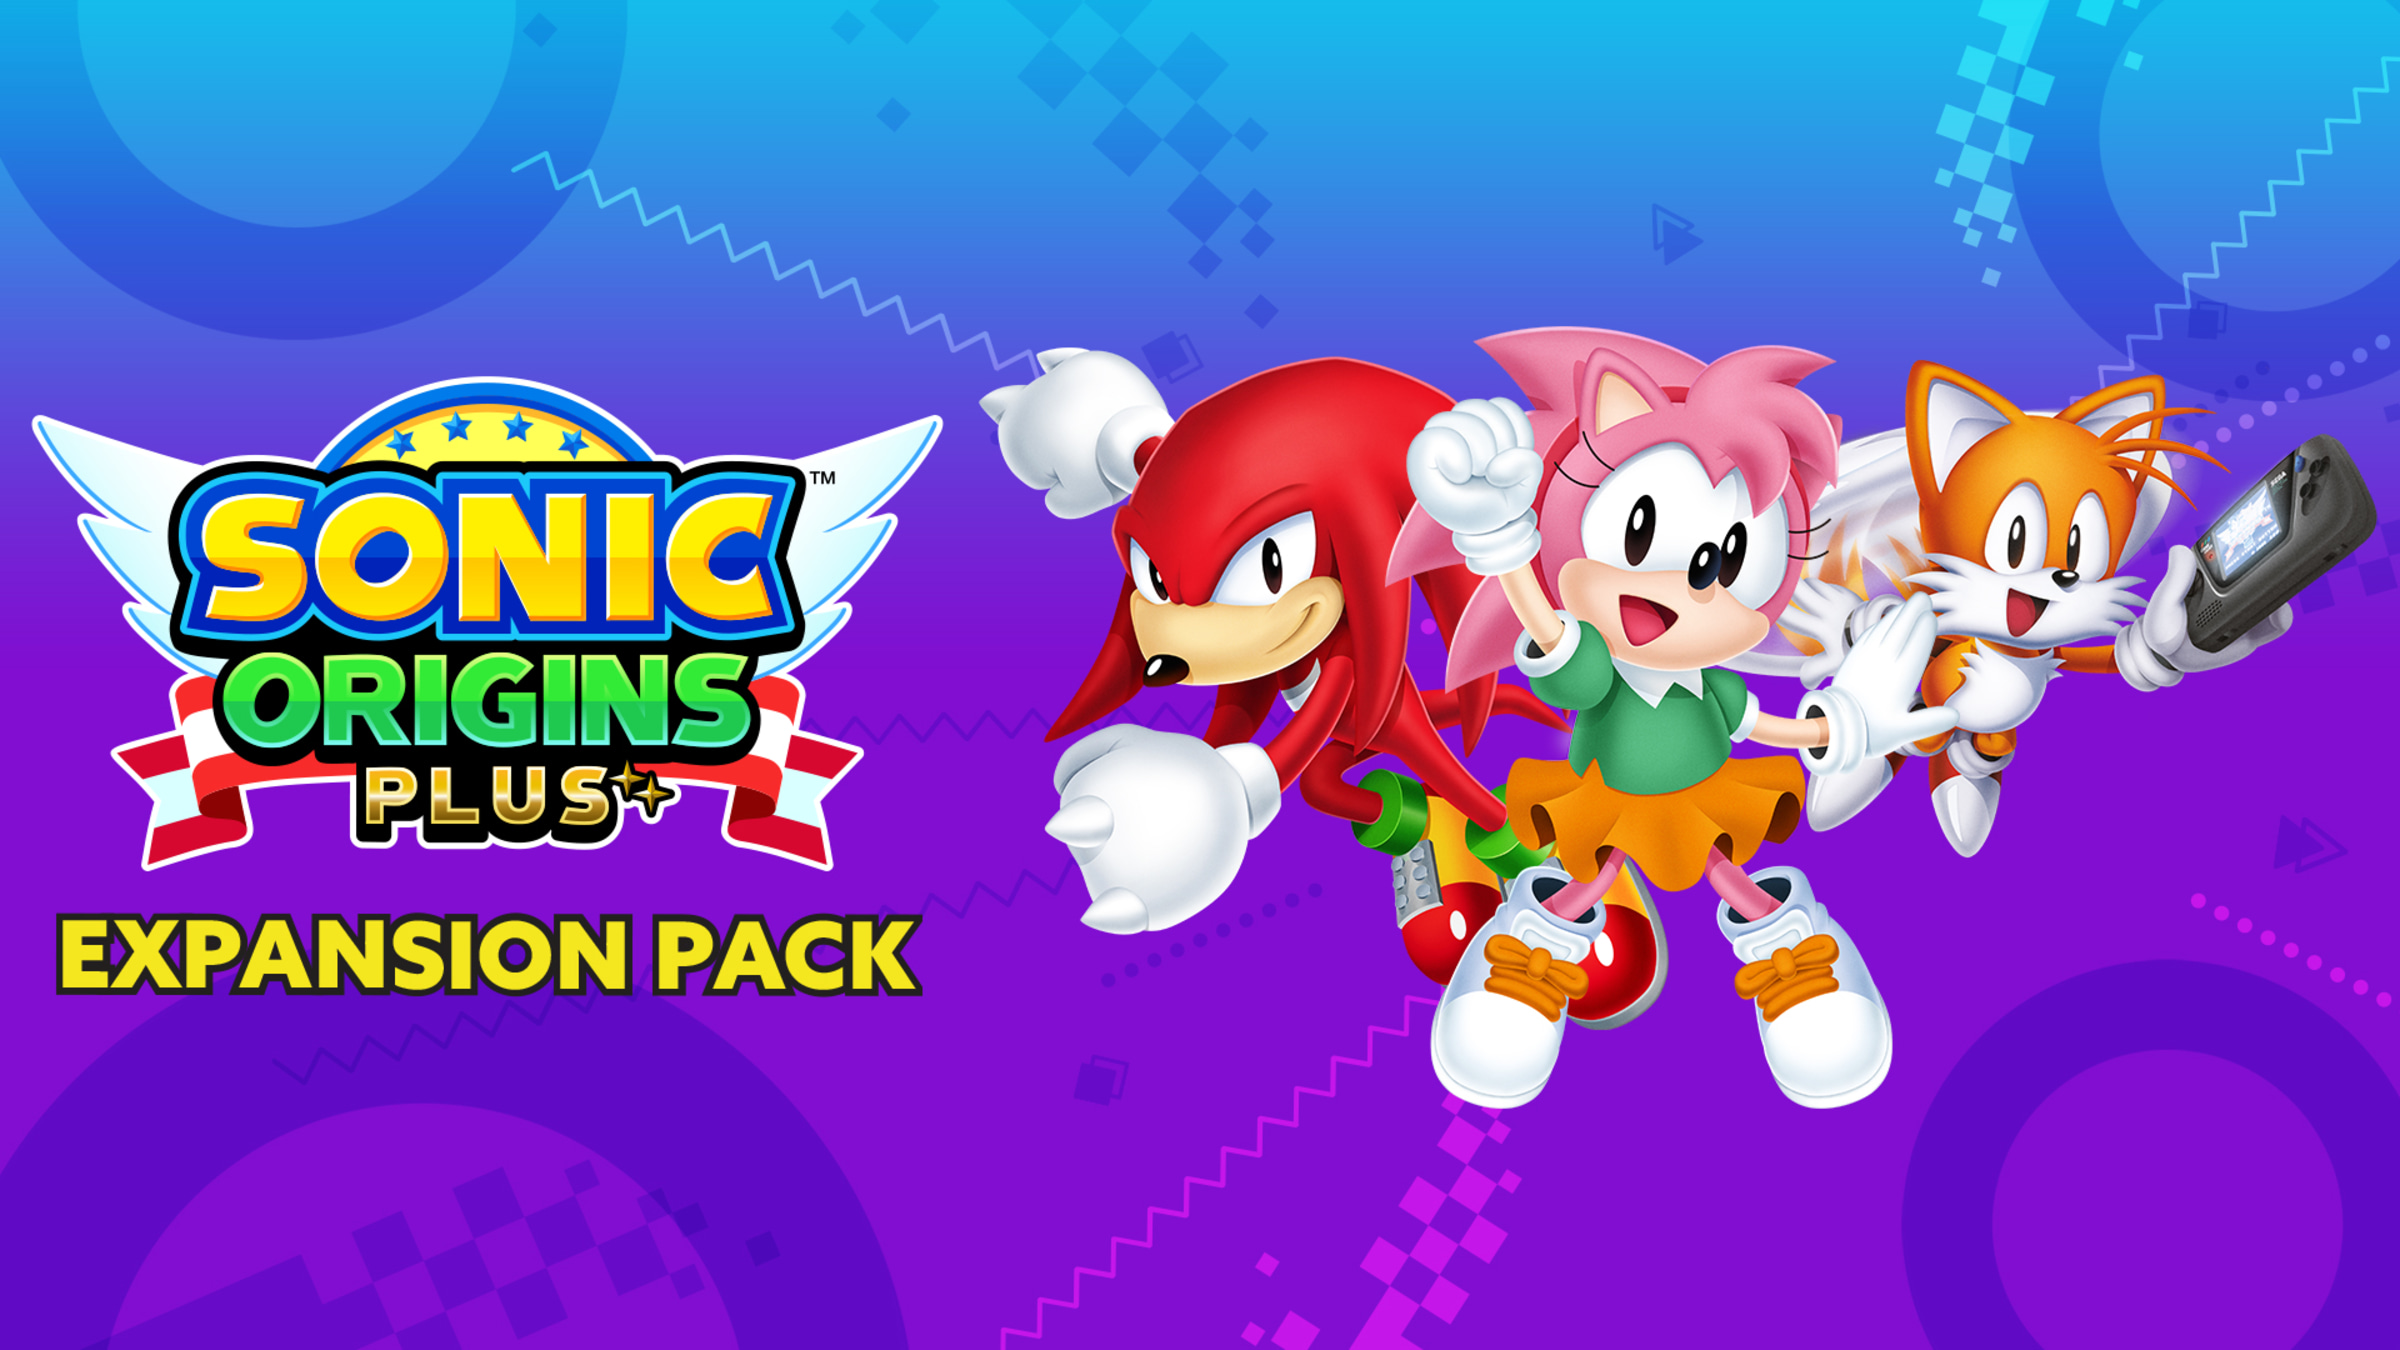 New Sonic Origins video - My Nintendo News